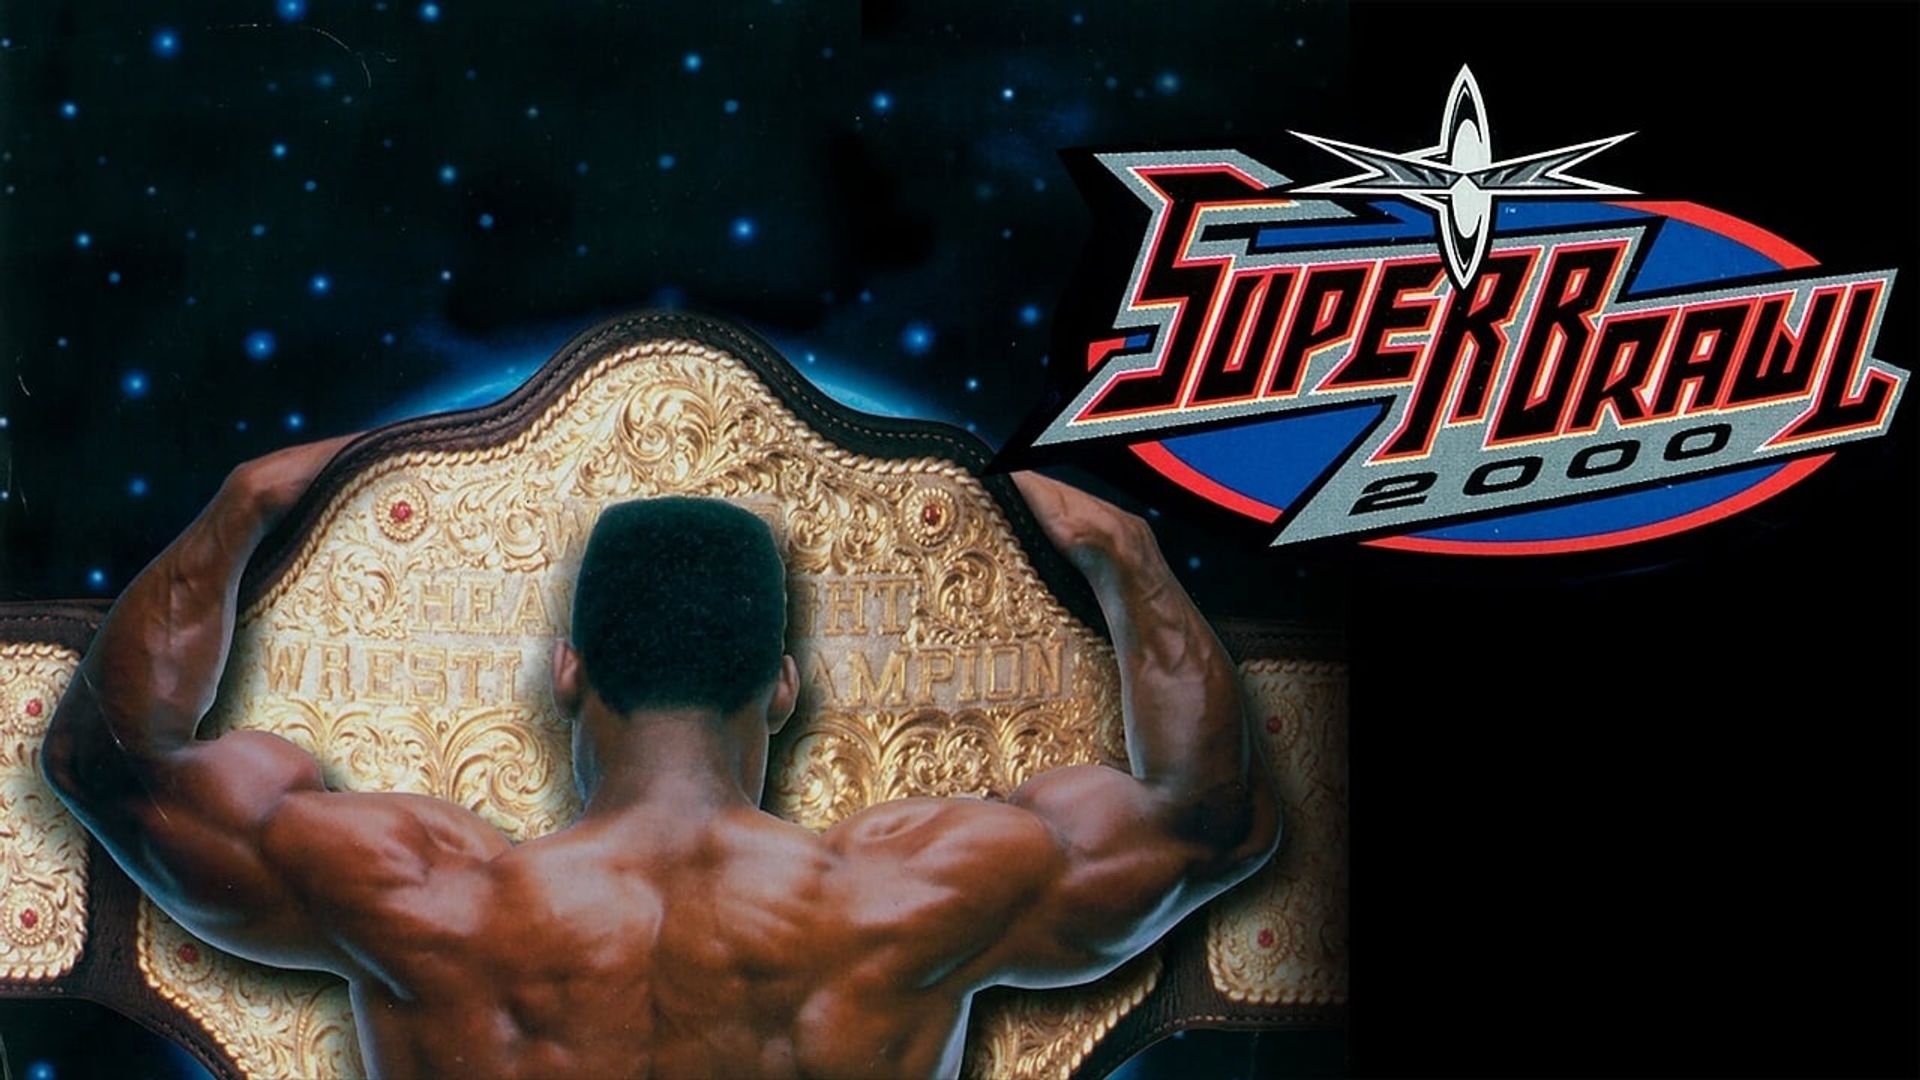 WCW SuperBrawl 2000 background